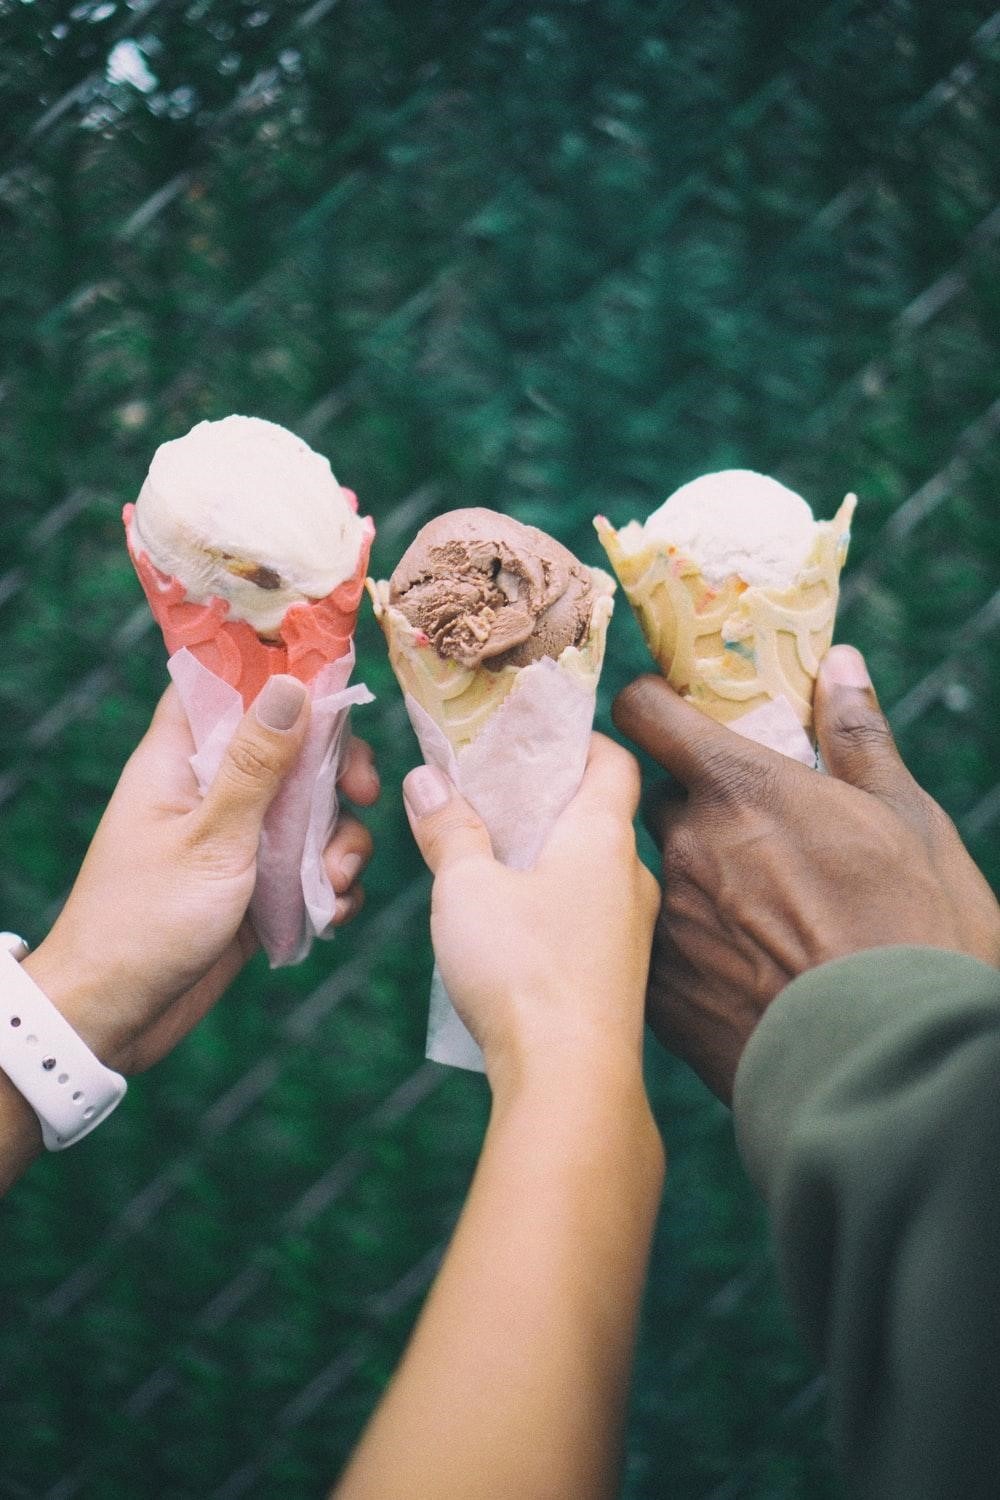 6 Fantastic Benefits of Organic Ice Cream